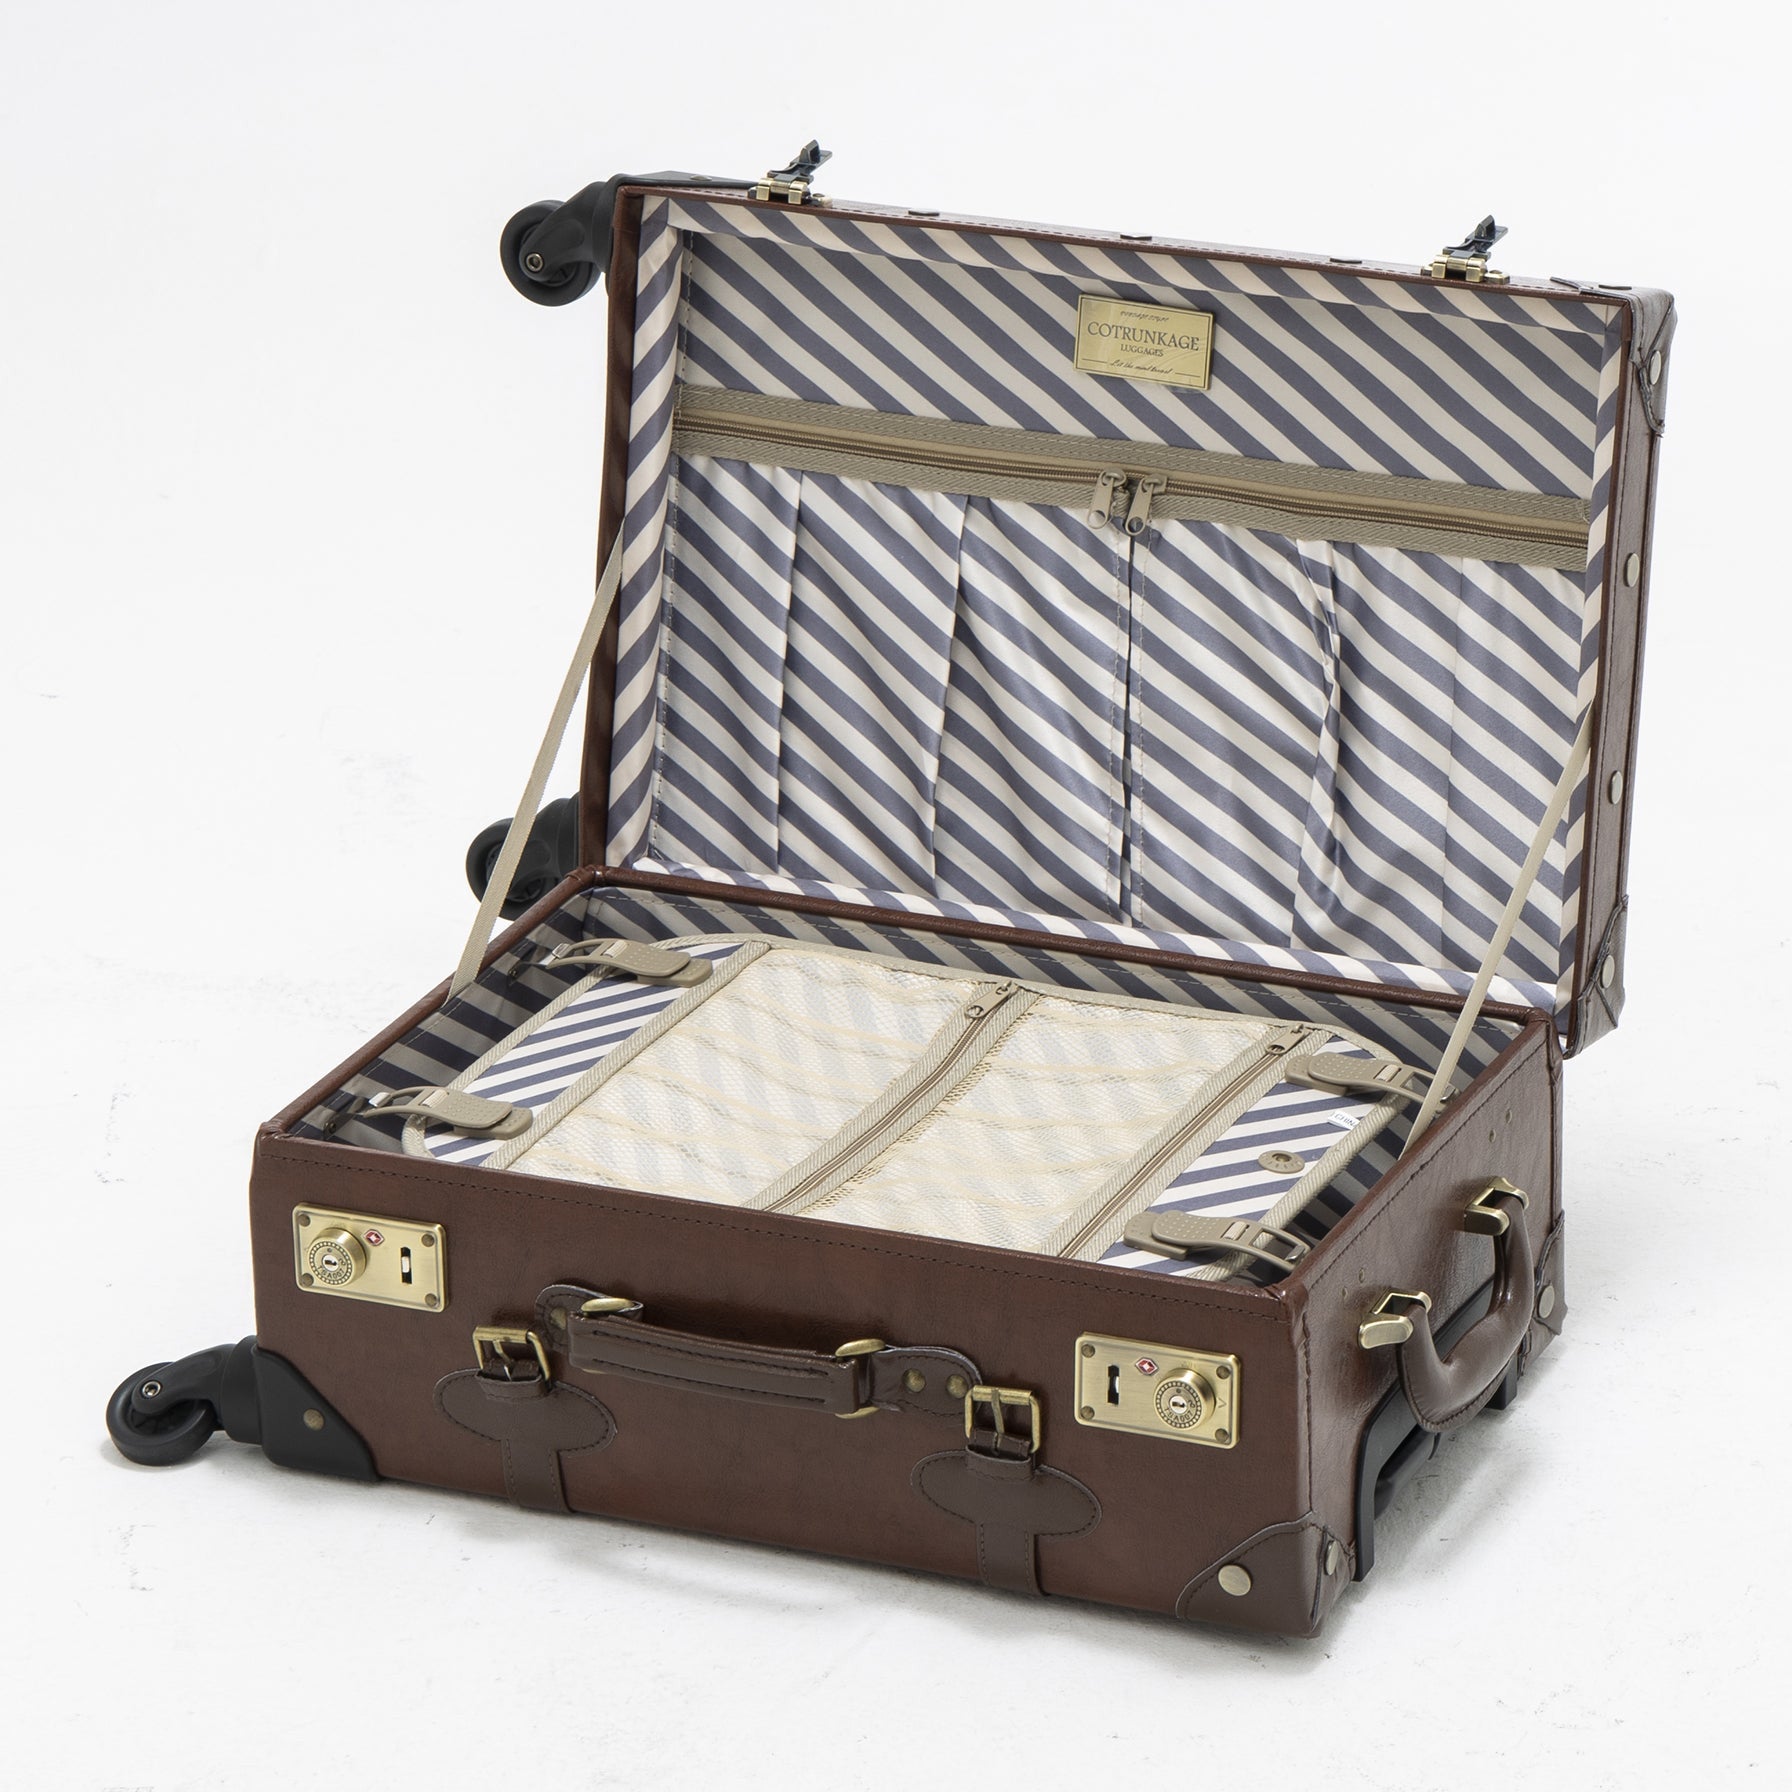 (United States) Minimalism 3 Pieces Luggage Set - Caramel Brown's